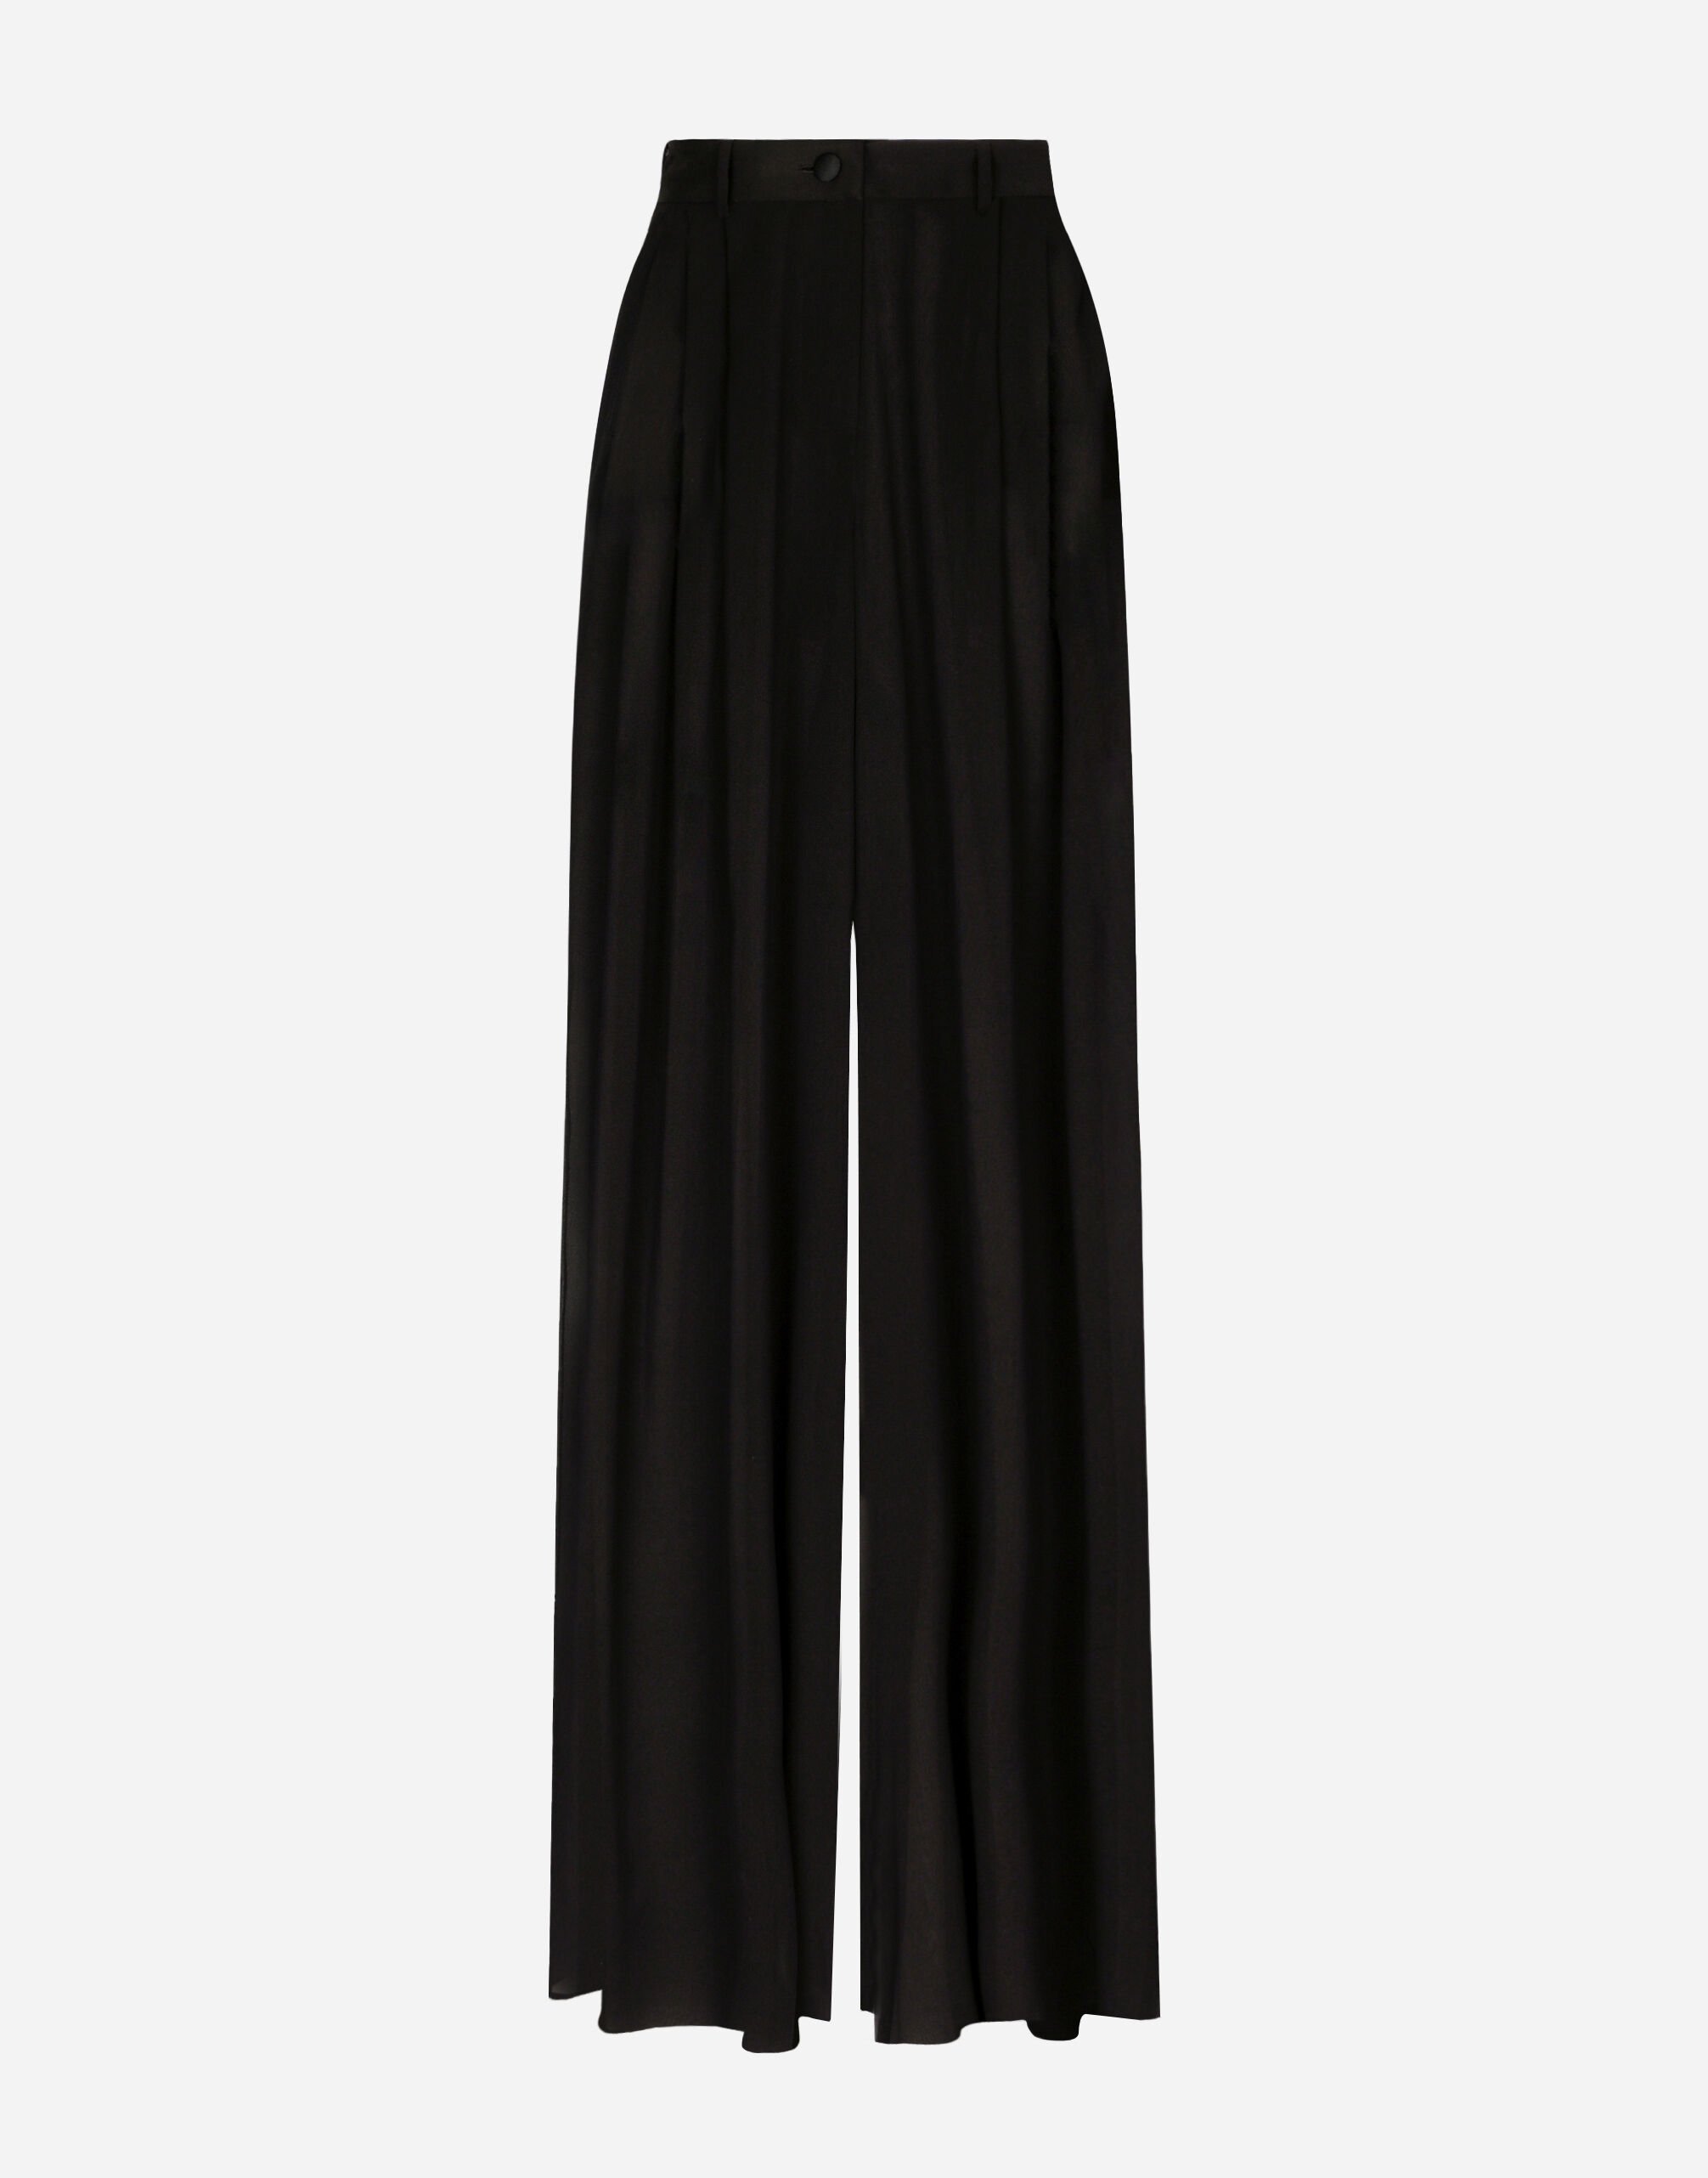 Dolce & Gabbana Pantalón de pernera ancha en chifón de seda Negro F6DFDTFLSIO